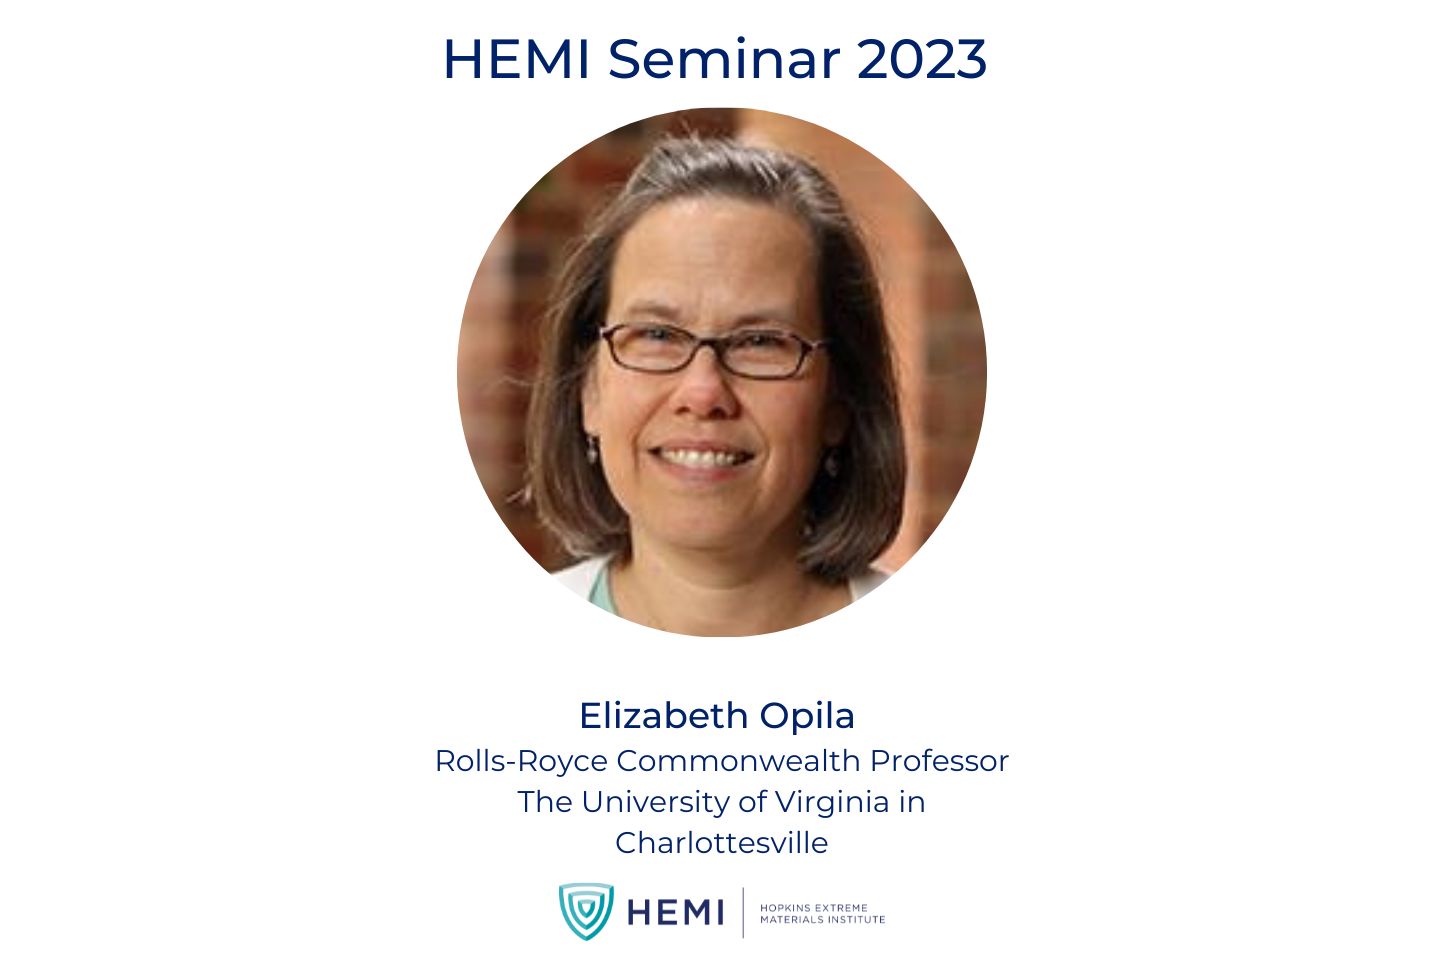 Elizabeth Opila headshot and HEMI logo with text: "HEMI Seminar 2023, Elizabeth Opila, Rolls-Royce Commonwealth Professor, The University of Virginia in Charlottesville"